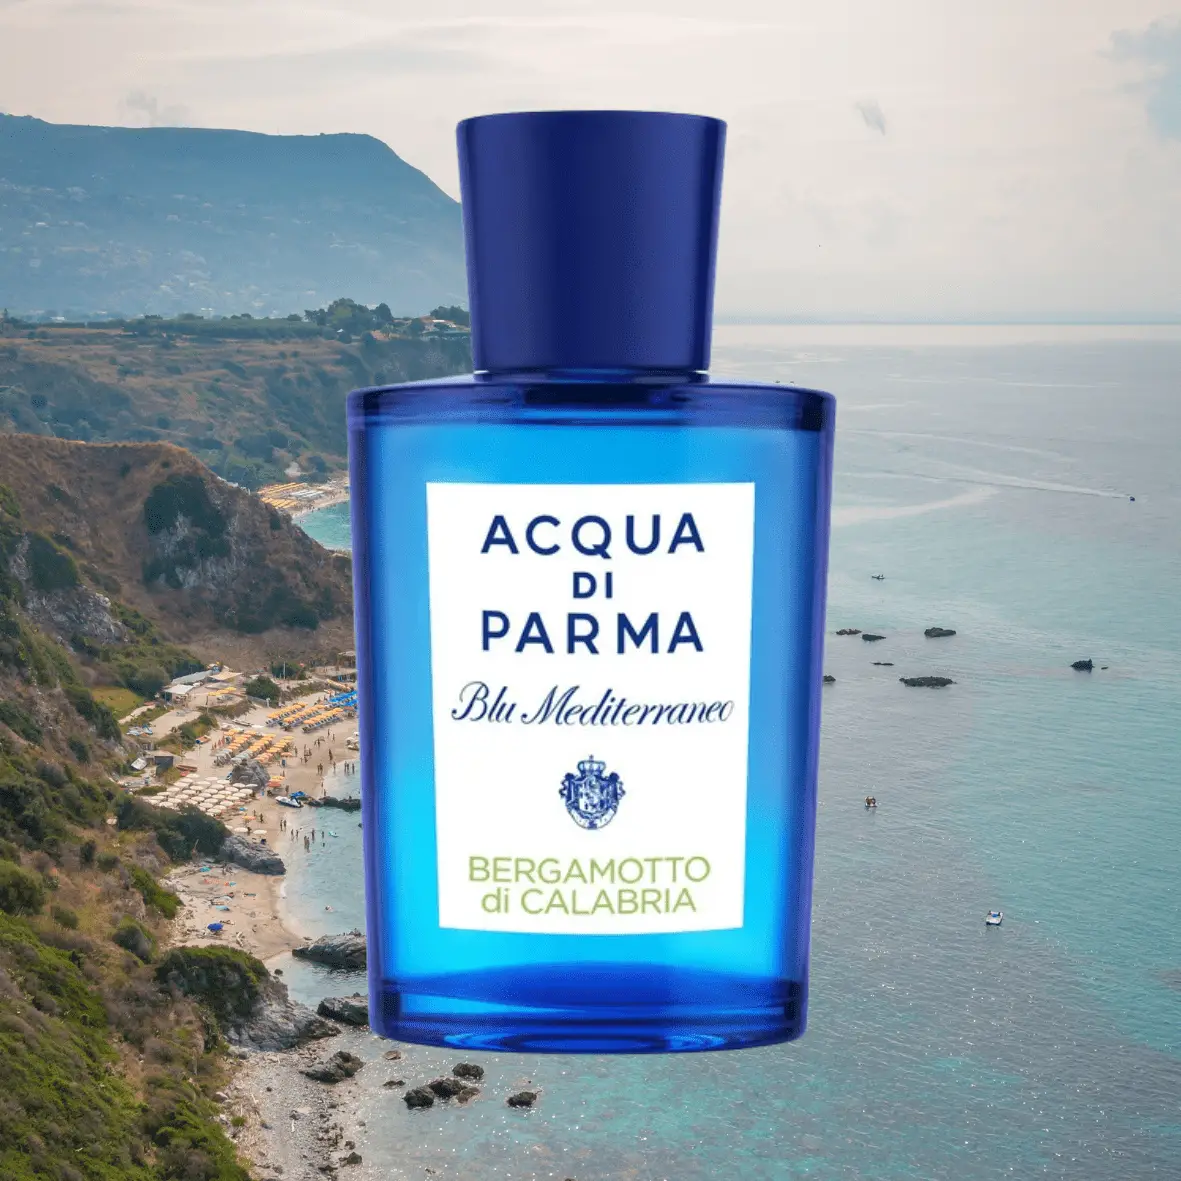 Best Bergamot Fragrances For Men & Women
Acqua di Parma Blu Mediterraneo Bergamotto di Calabria